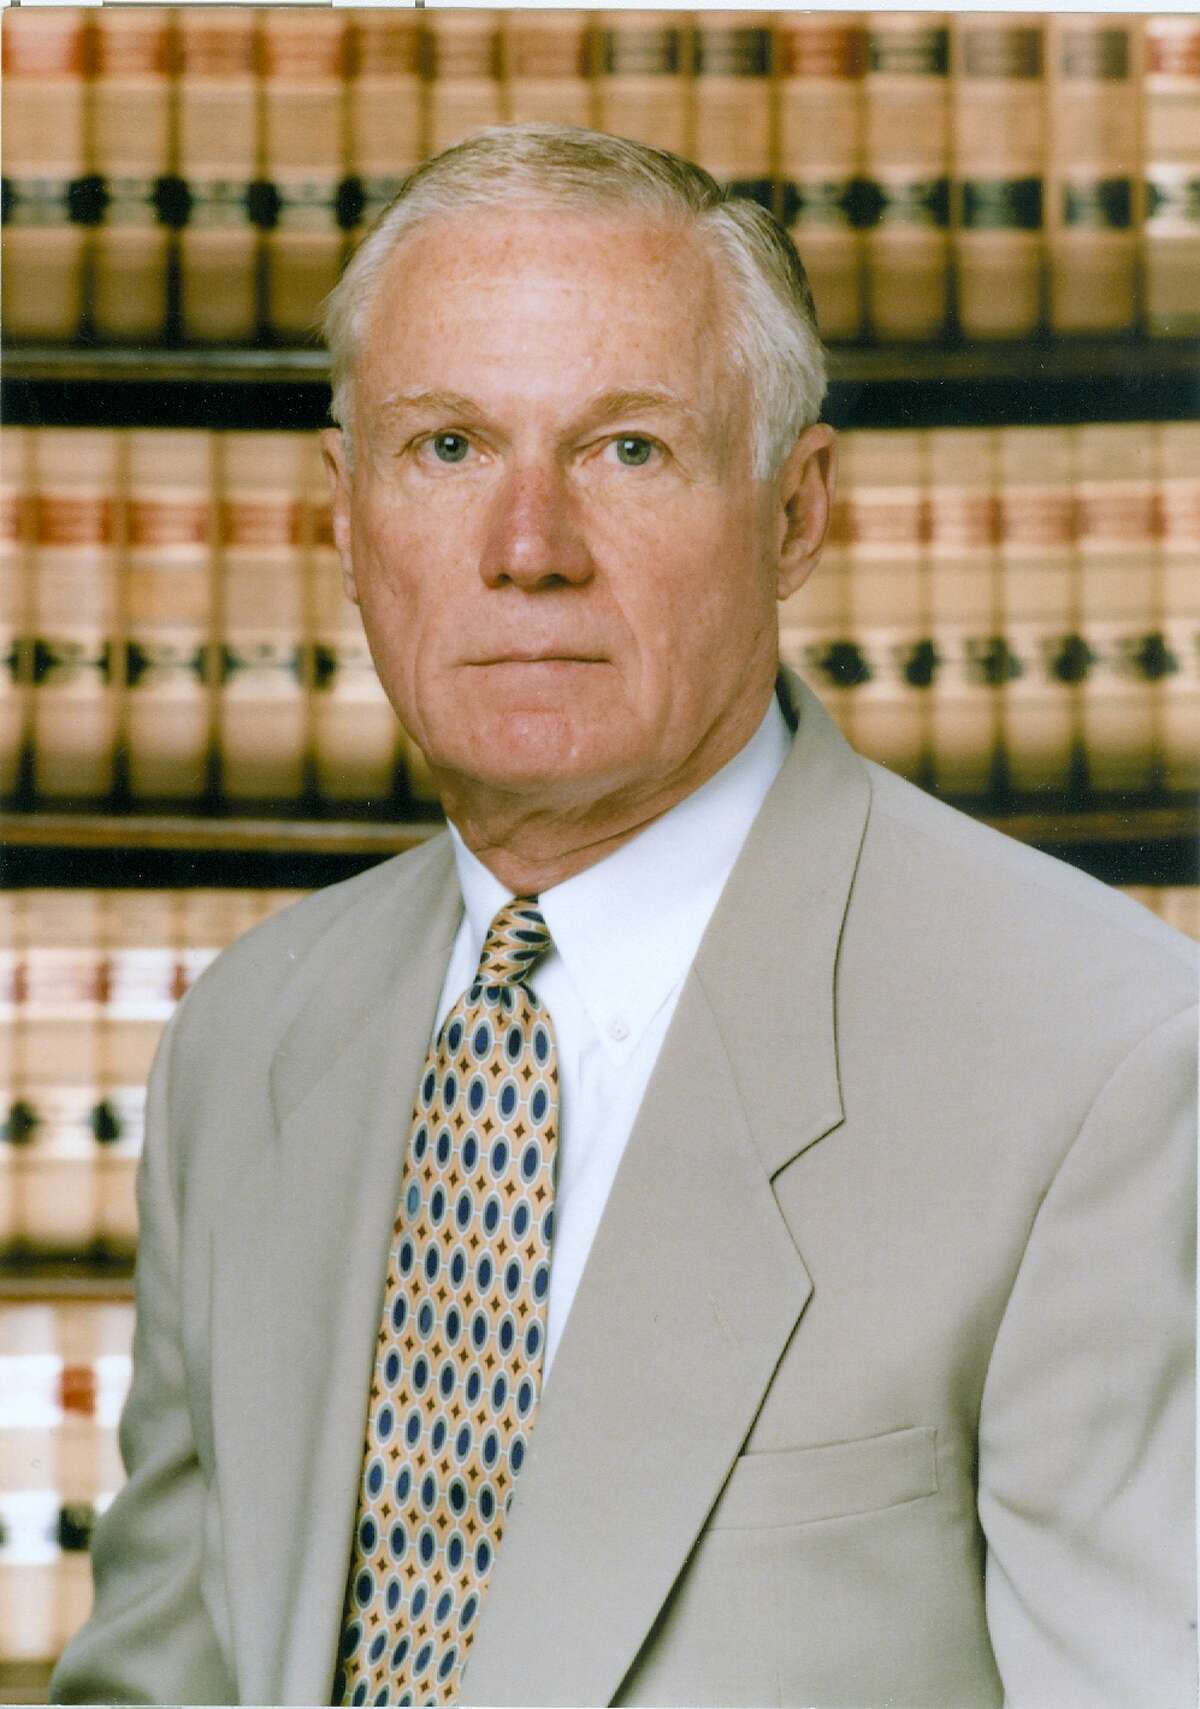 Superior Court Judge John J. Ronan.